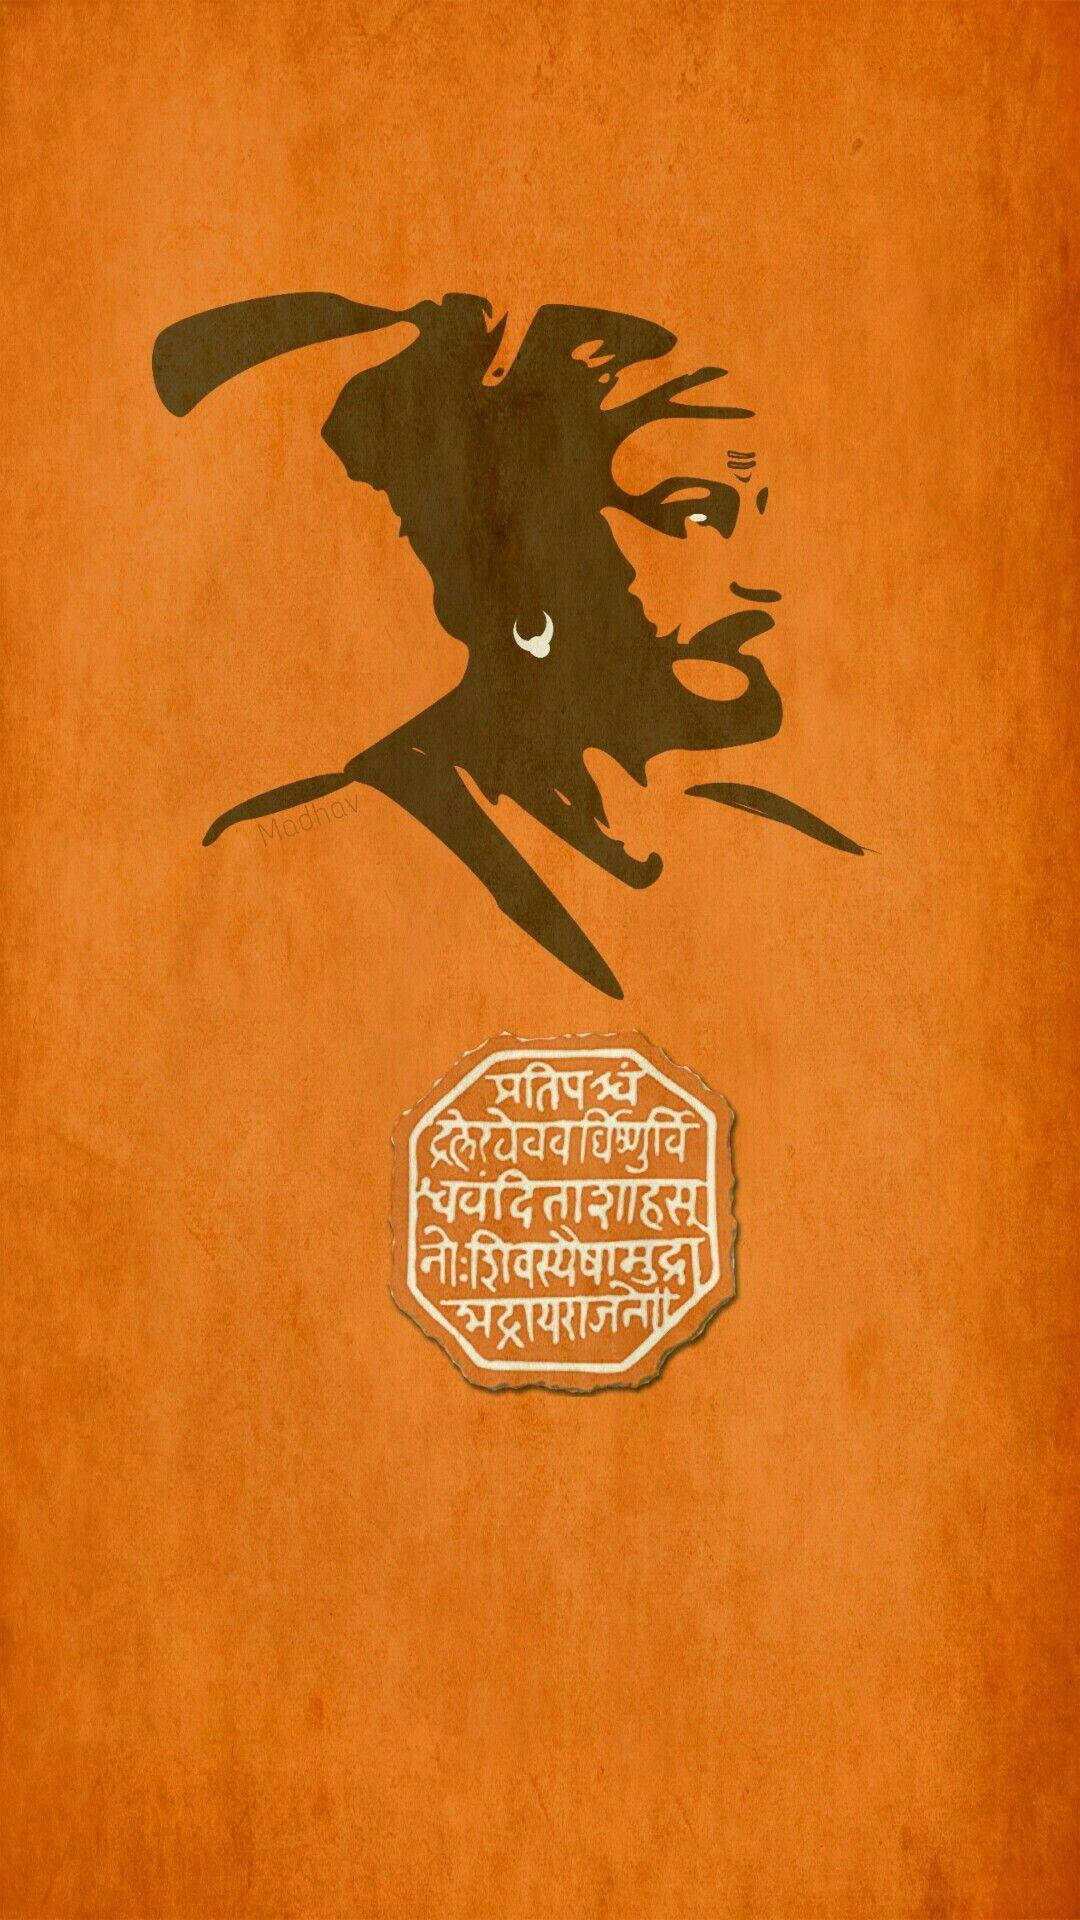 Download Shivaji Maharaj Paint Art On Orange Wall Hd Wallpaper | Wallpapers .com